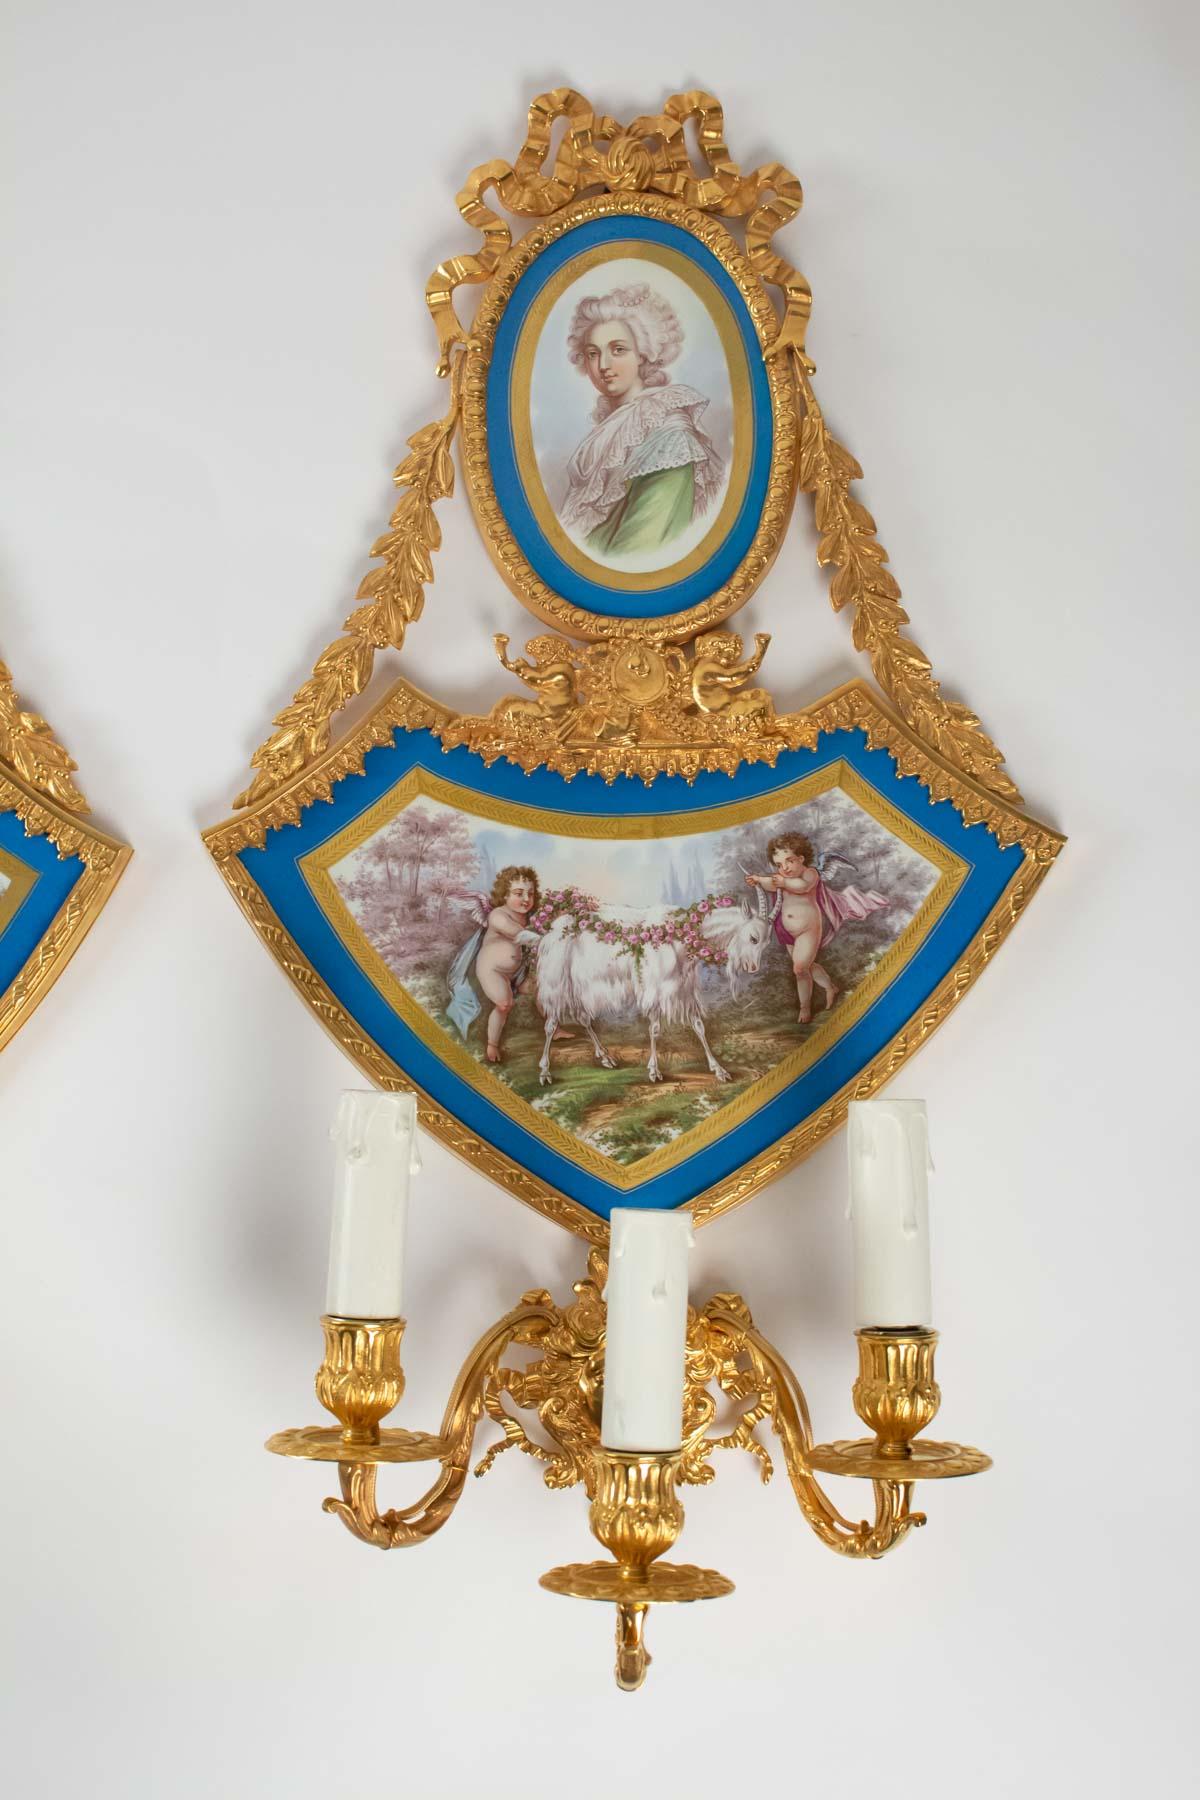 Pair of 19th century sconces, Napoleon III period, gilt bronze and porcelain, richly decorated.
Measures: H 65cm, W 35cm, W 16cm.